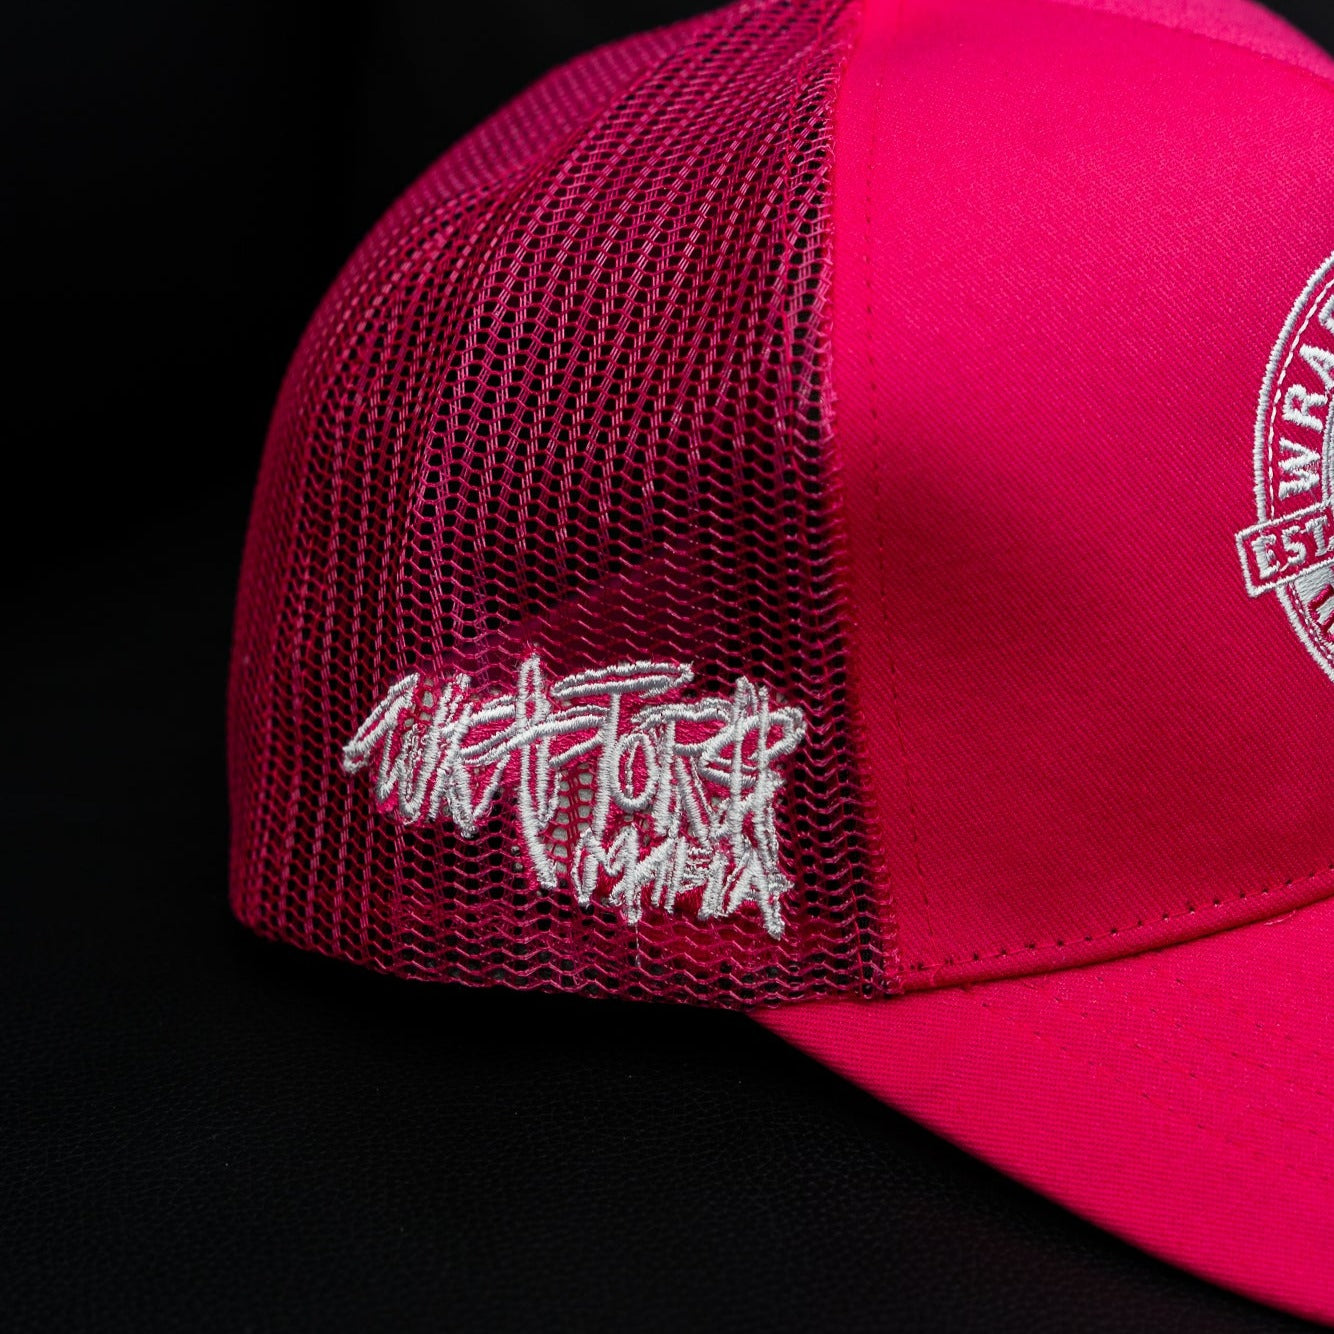 Wraptors Mafia Hot Pink & White Trucker Hat